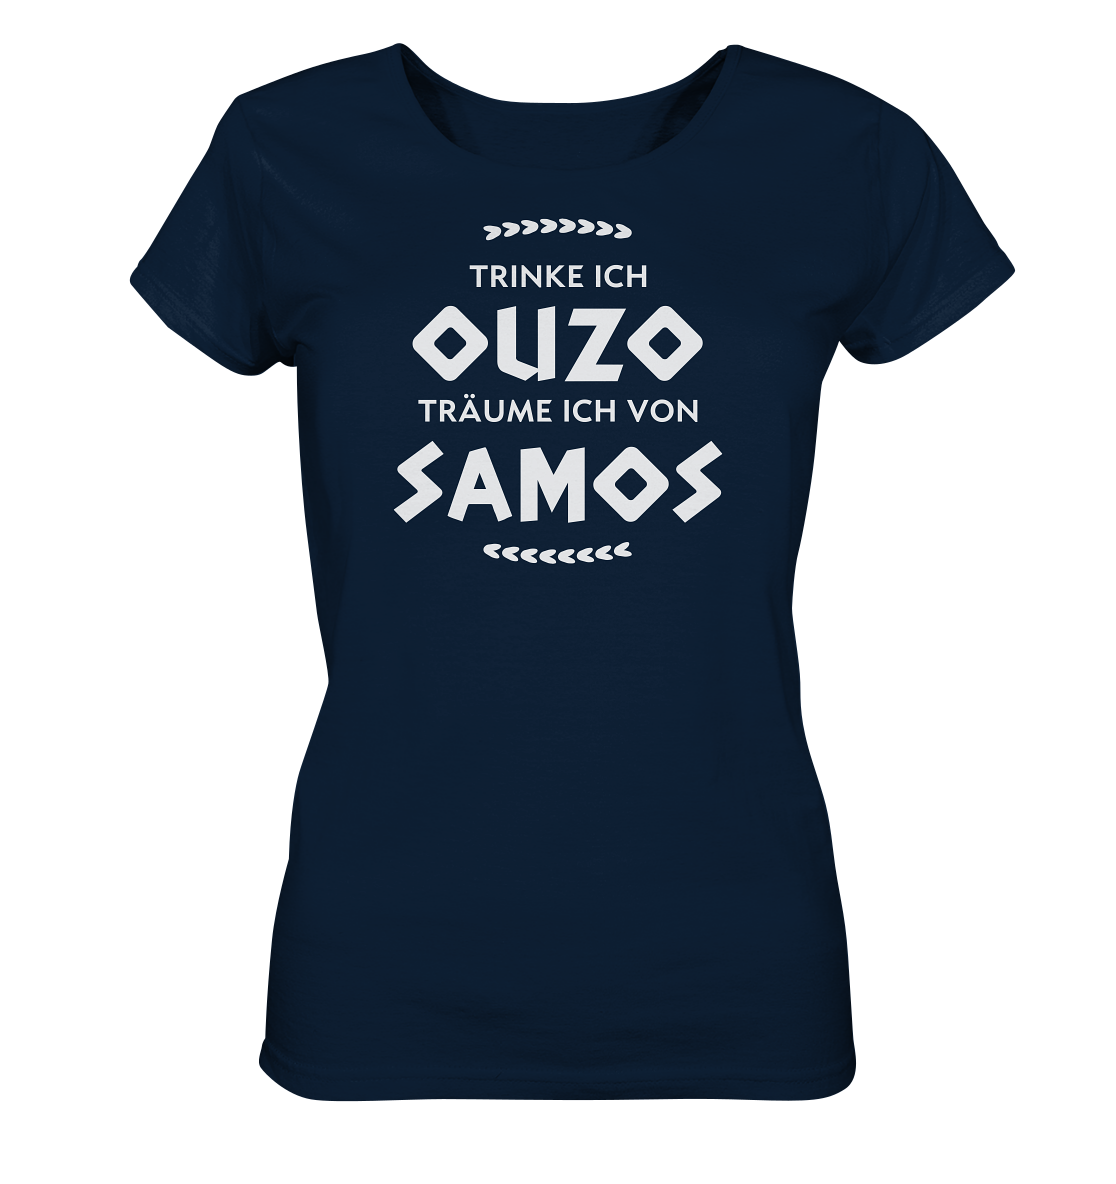 If I drink Ouzo I dream of Samos - Ladies Organic Shirt